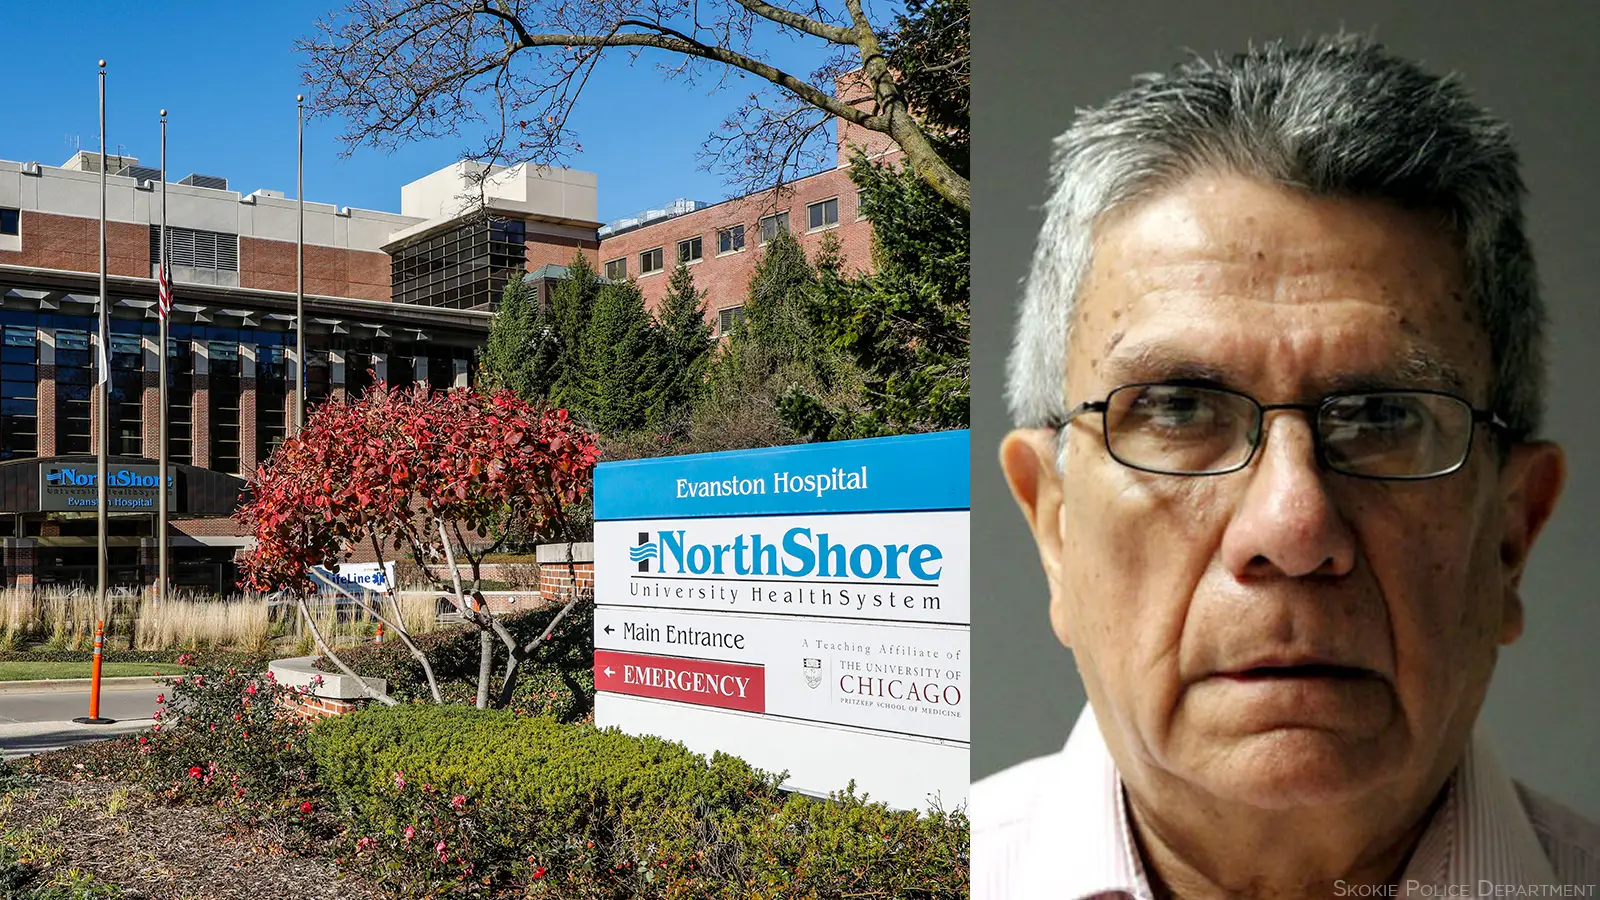 Jane Doe 29 alleges sexual assault by Gynecologist Fabio Ortega, NorthShore University HealthSystem